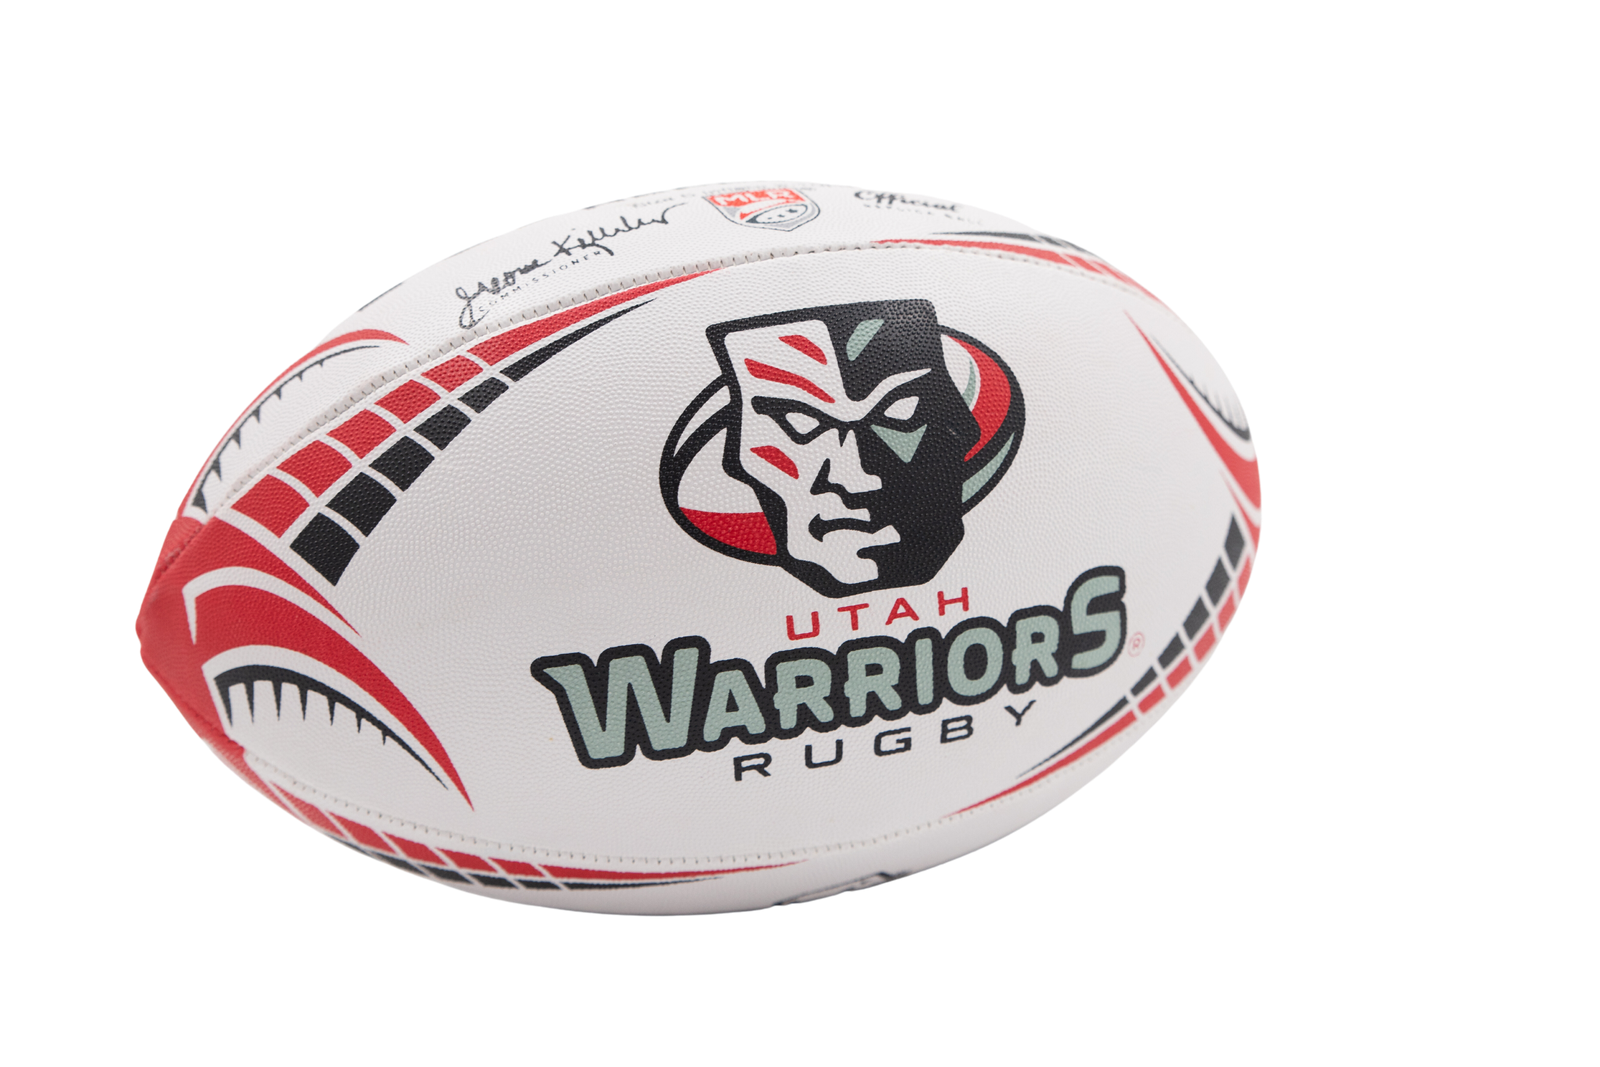 Warriors Rugby Ball - Utah Warriors Rugby